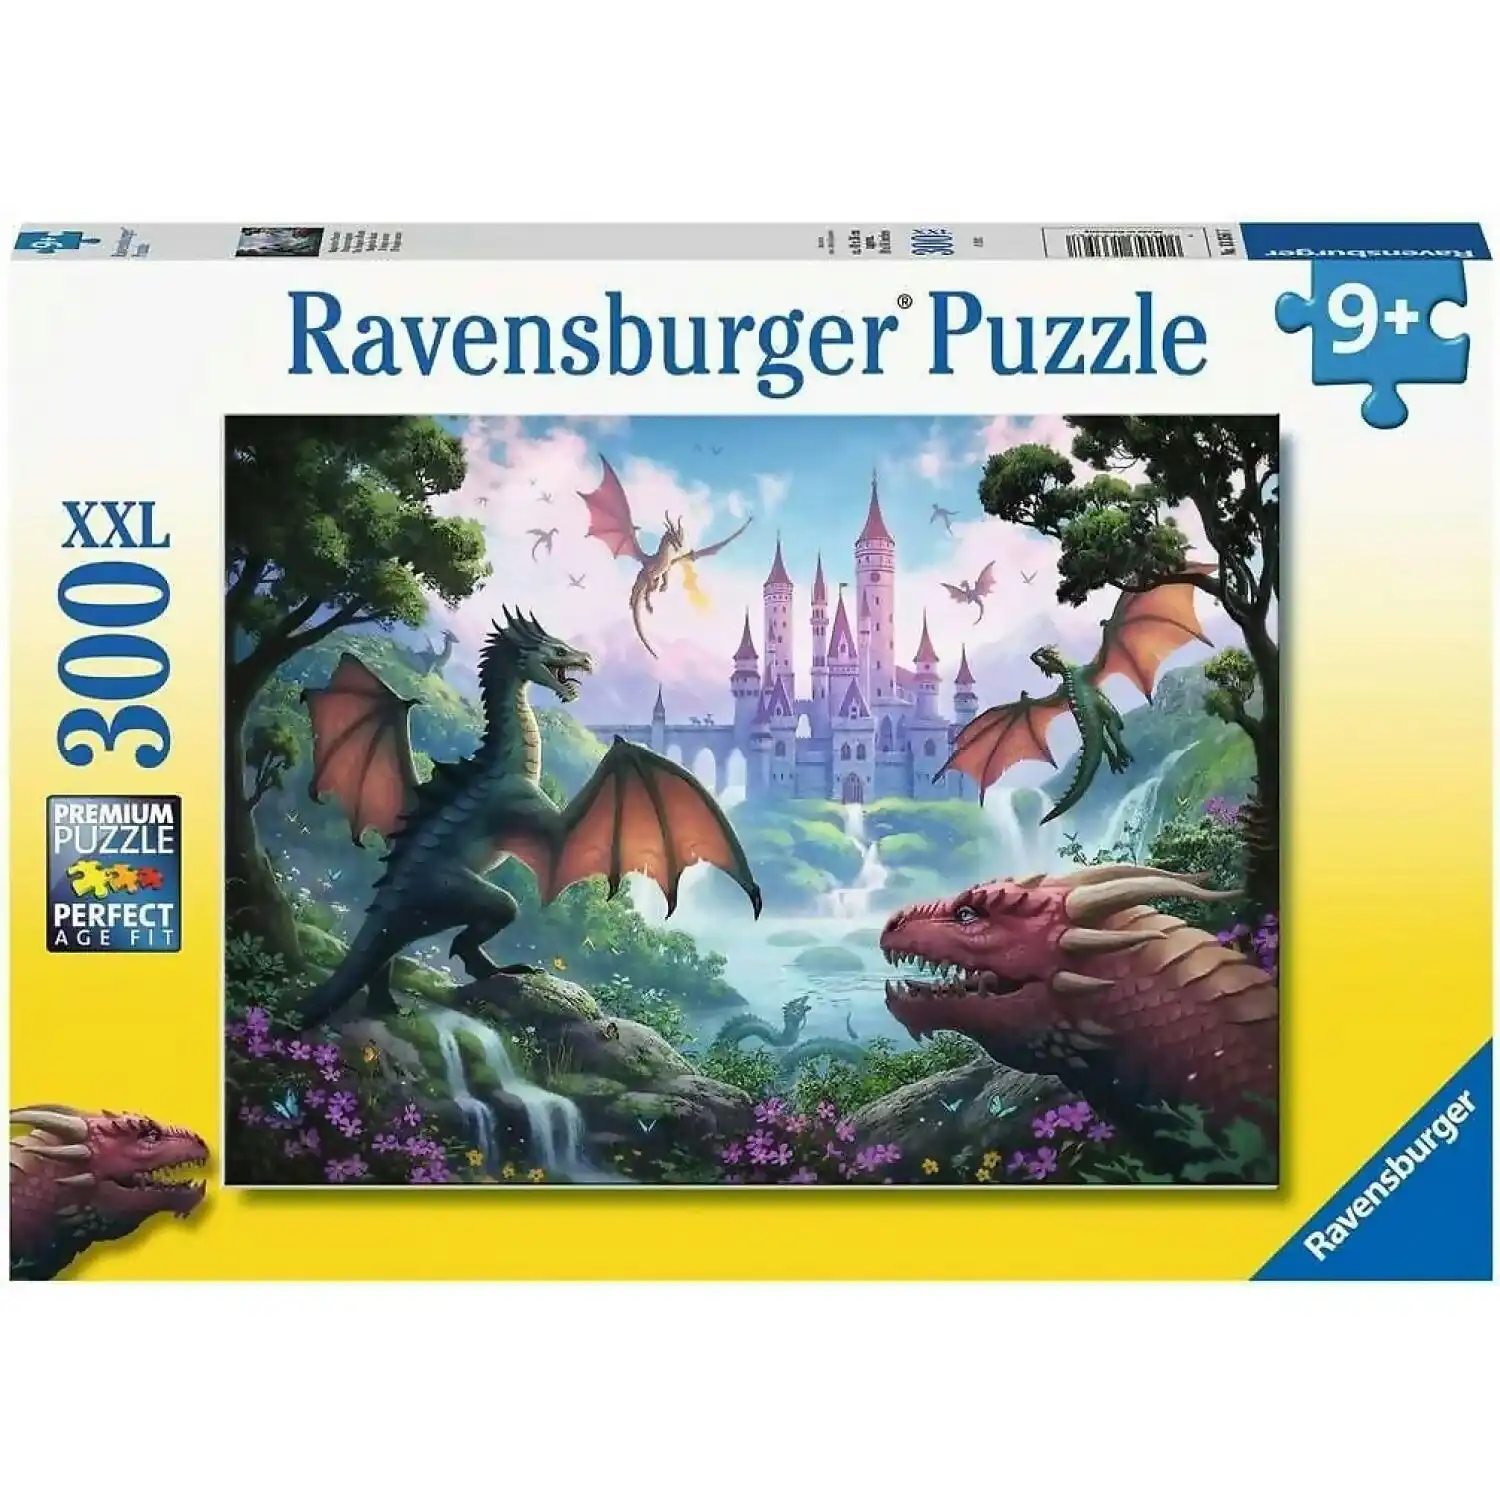 Ravensburger - The Dragons Wrath Jigsaw Puzzle XXL 300pc